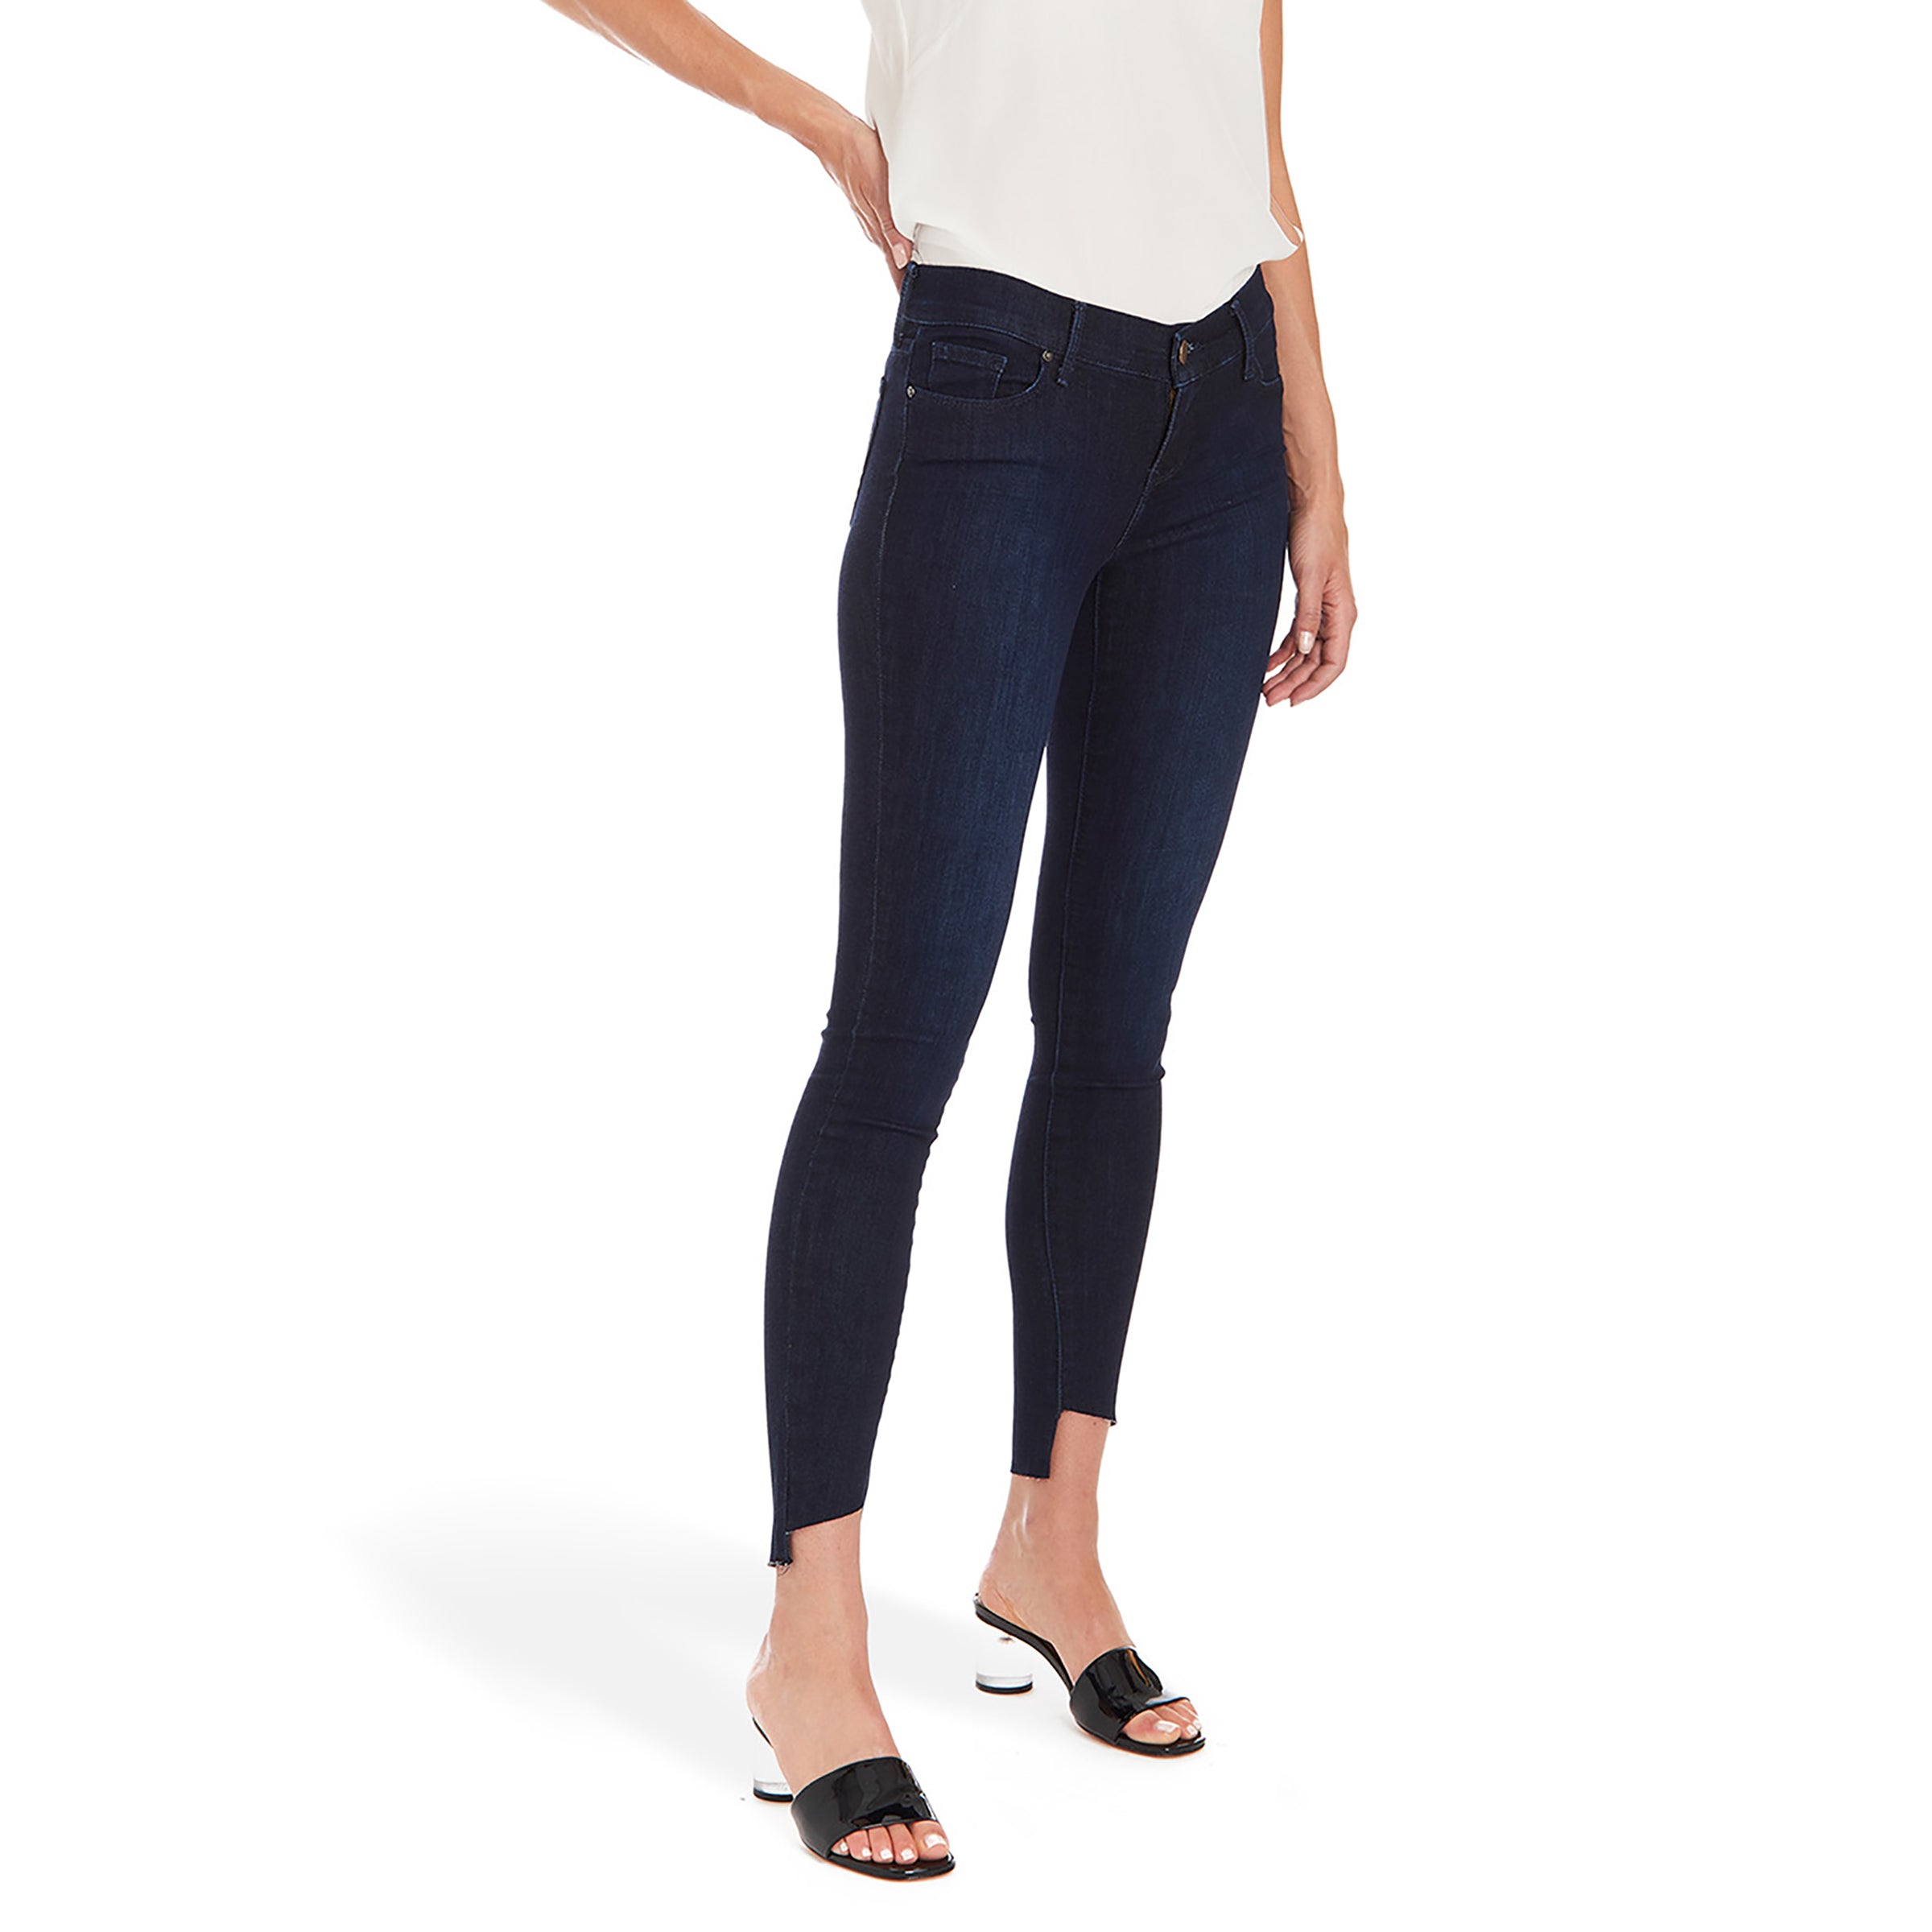 Women wearing Bleu Foncé avec Ourlet Diagonal Mid Rise Skinny Vestry Jeans